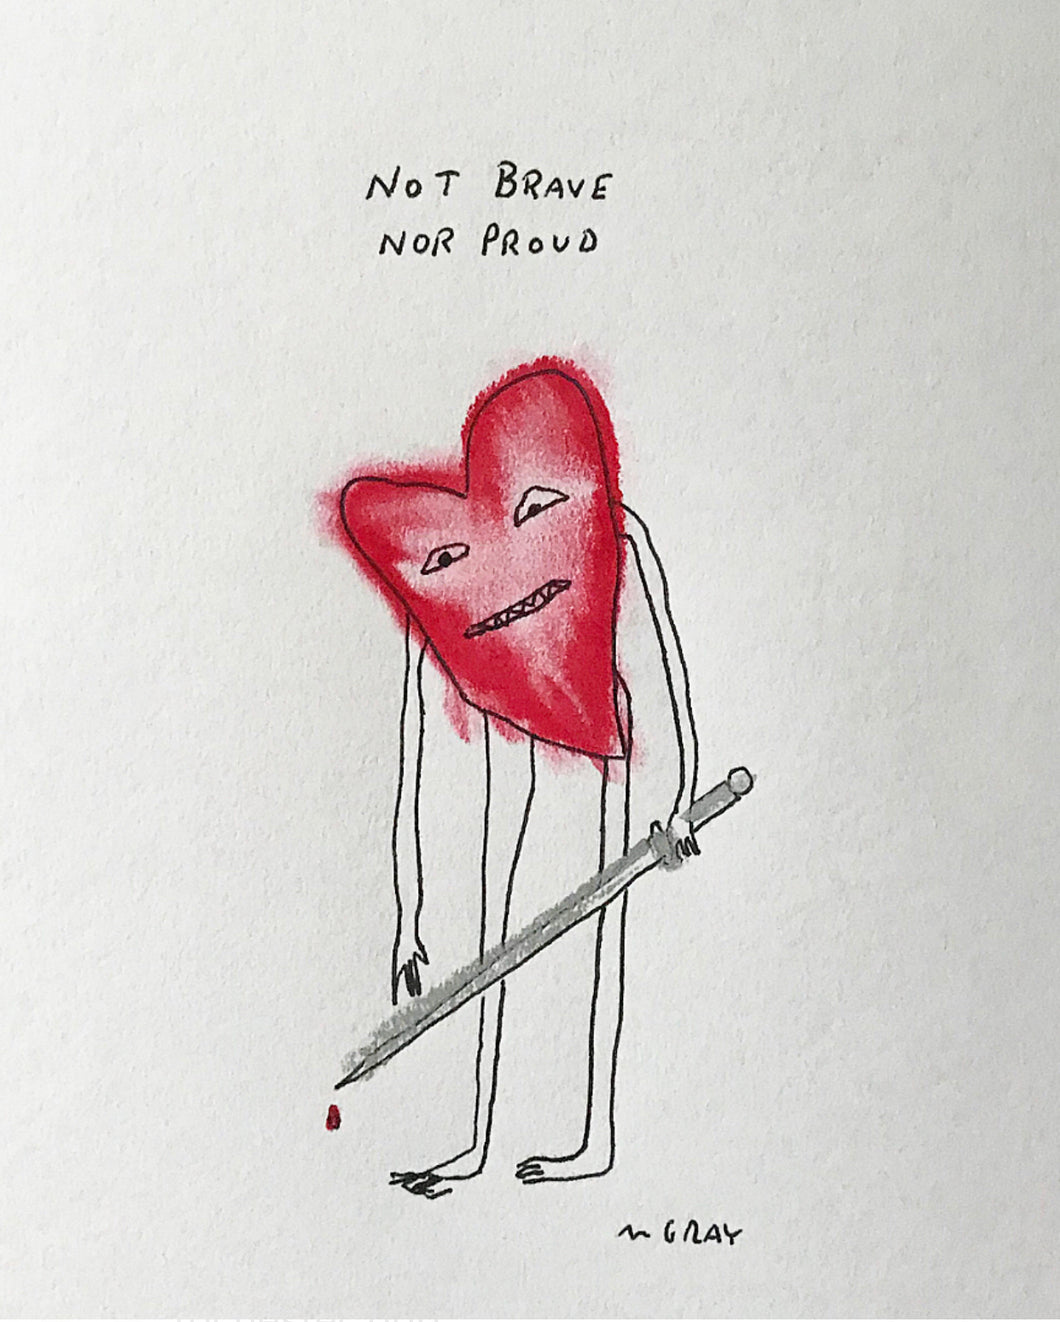 NOT BRAVE HEART